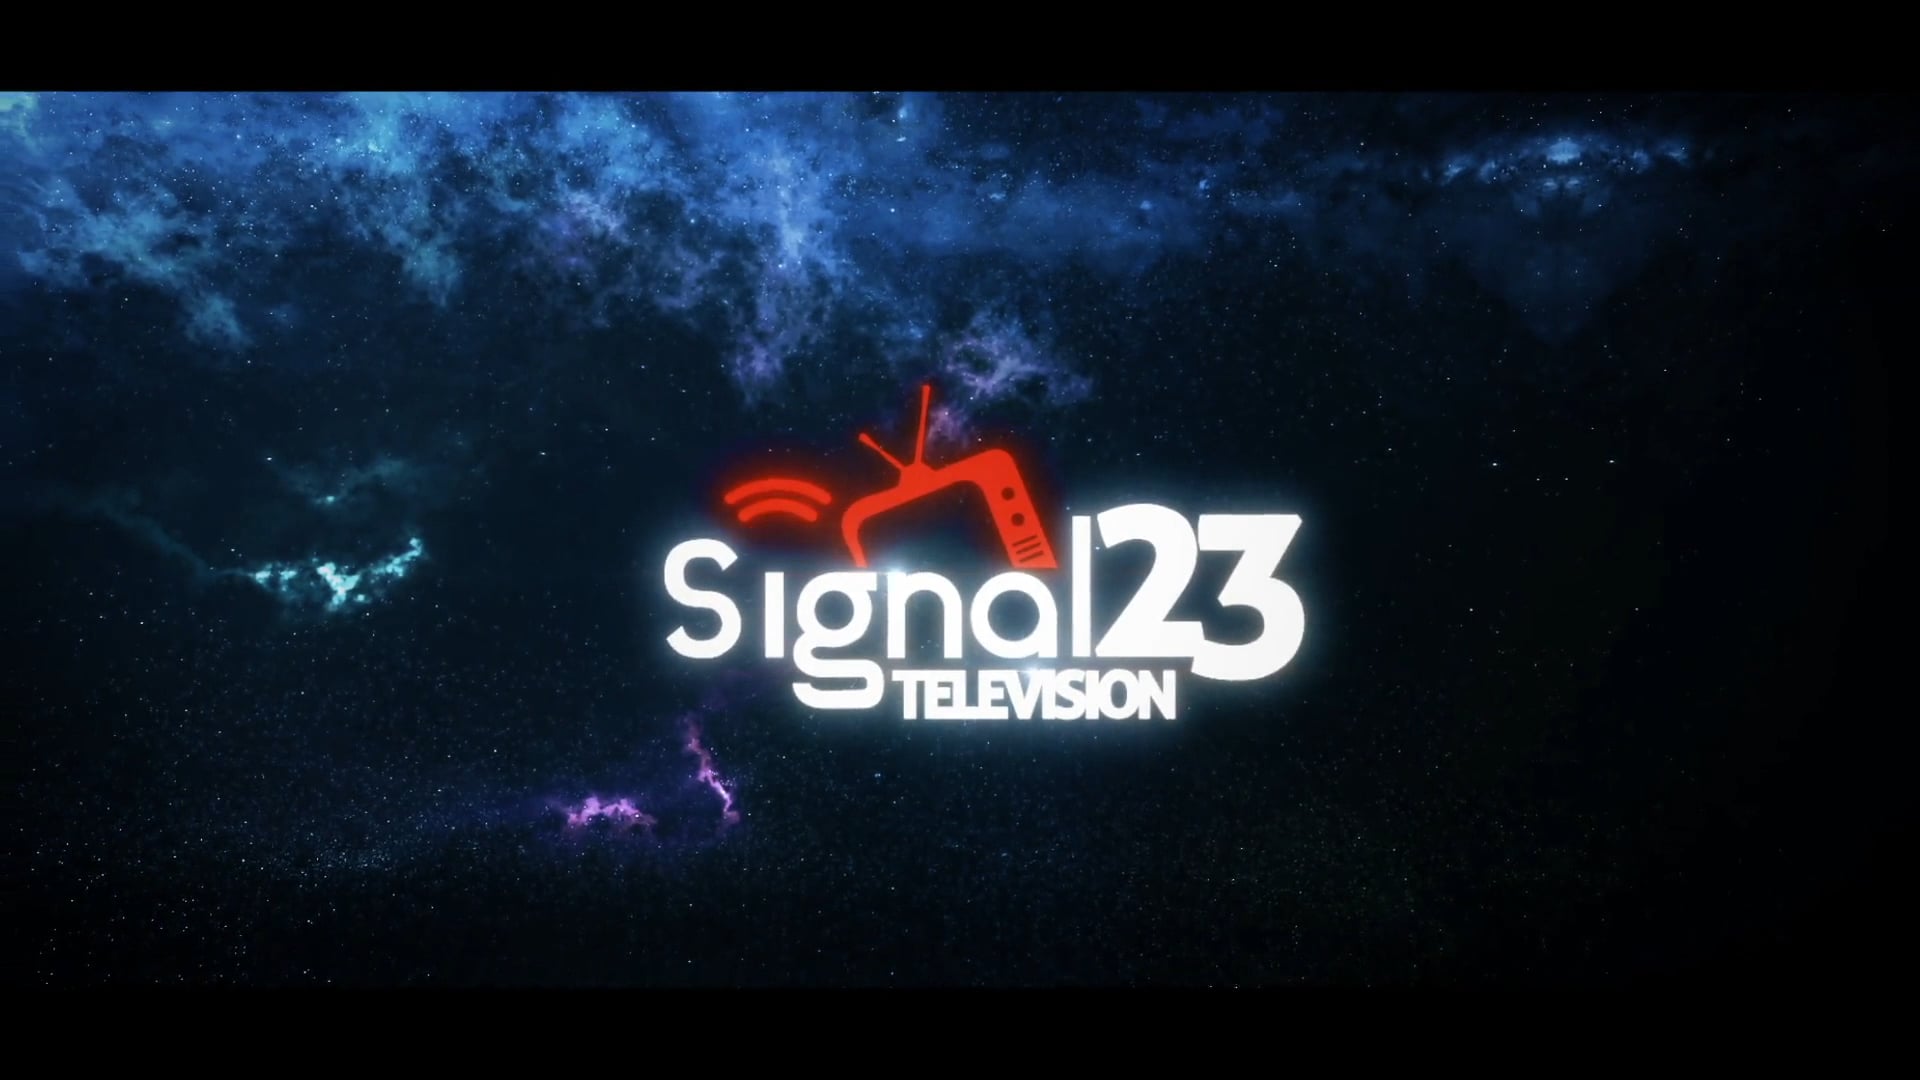 signal 23 free